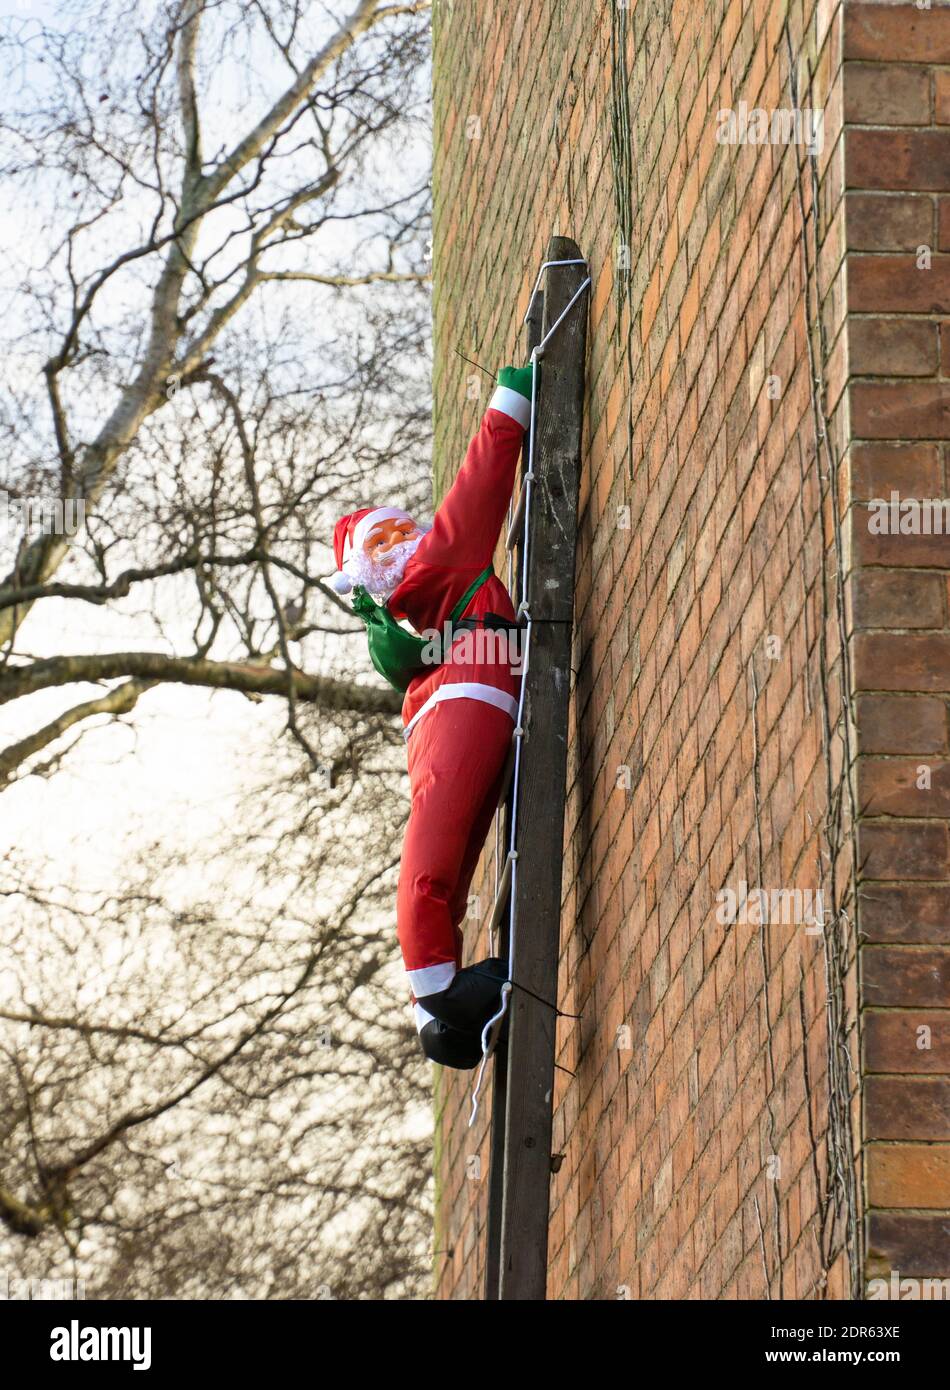 Father Christmas figure climbing a ladder Stock Photo